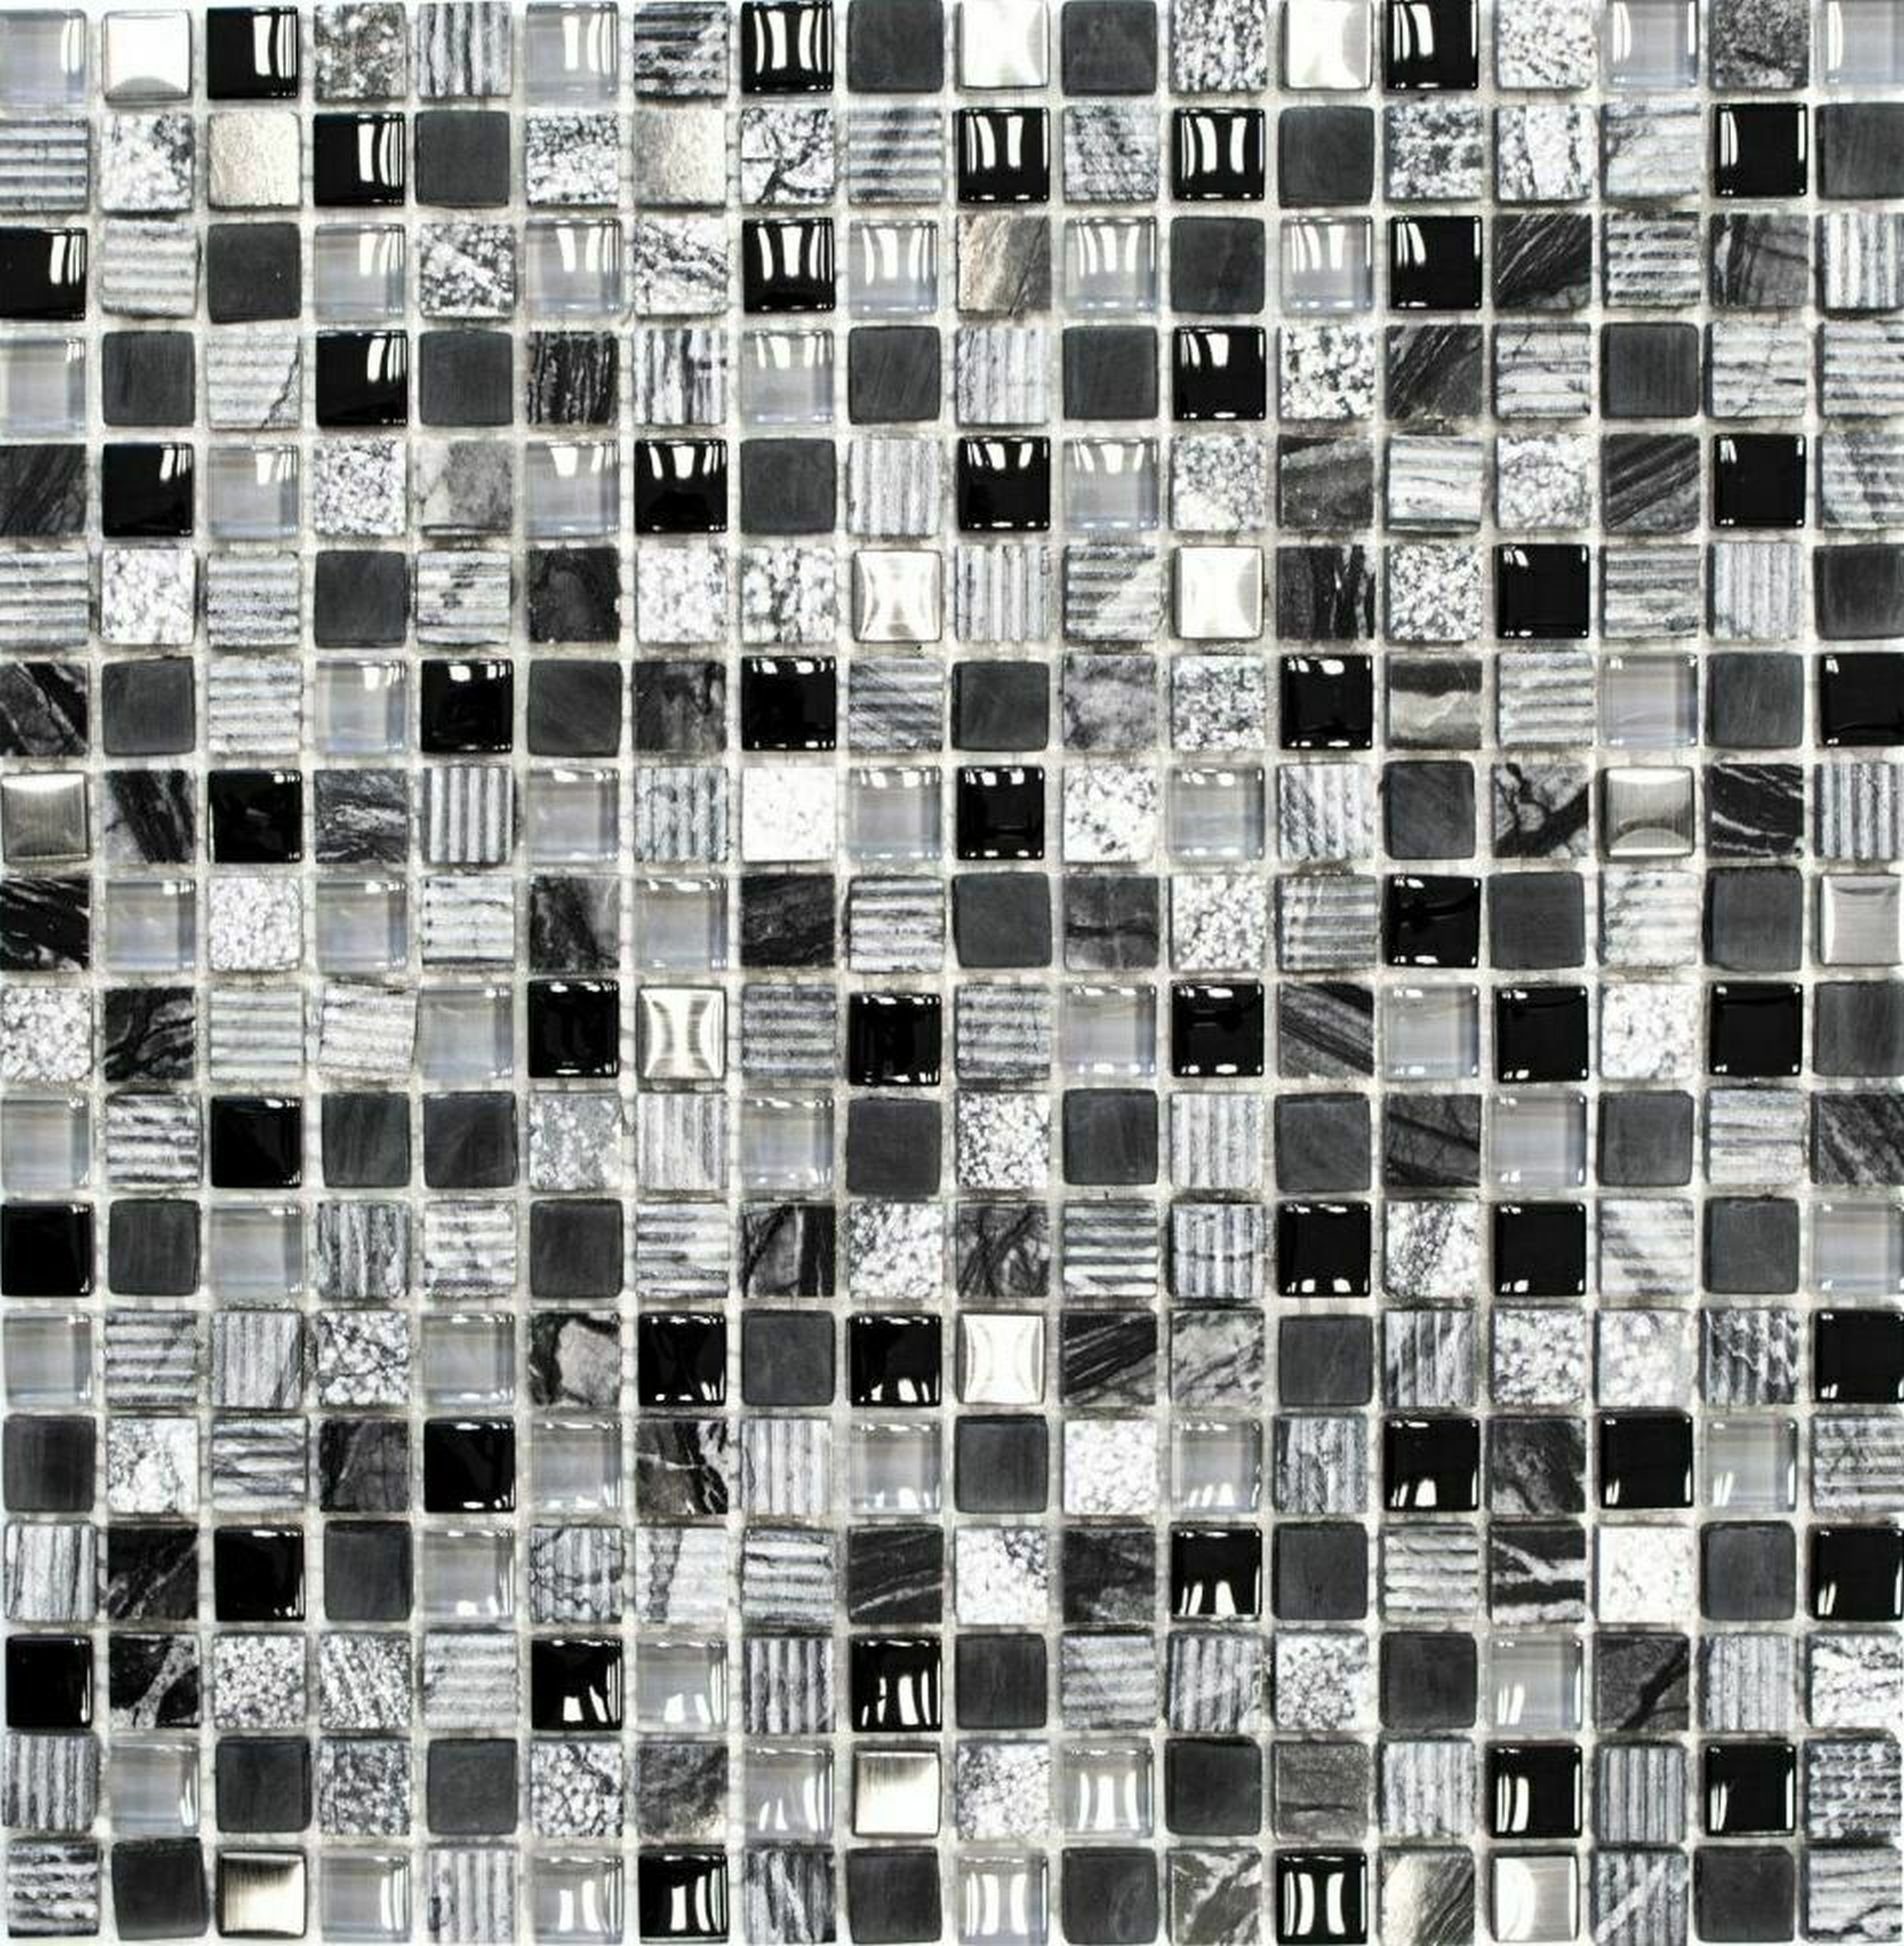 Mosani Mosaikfliesen Glasmosaik Naturstein Mosaikfliese Fliese grau schwarz